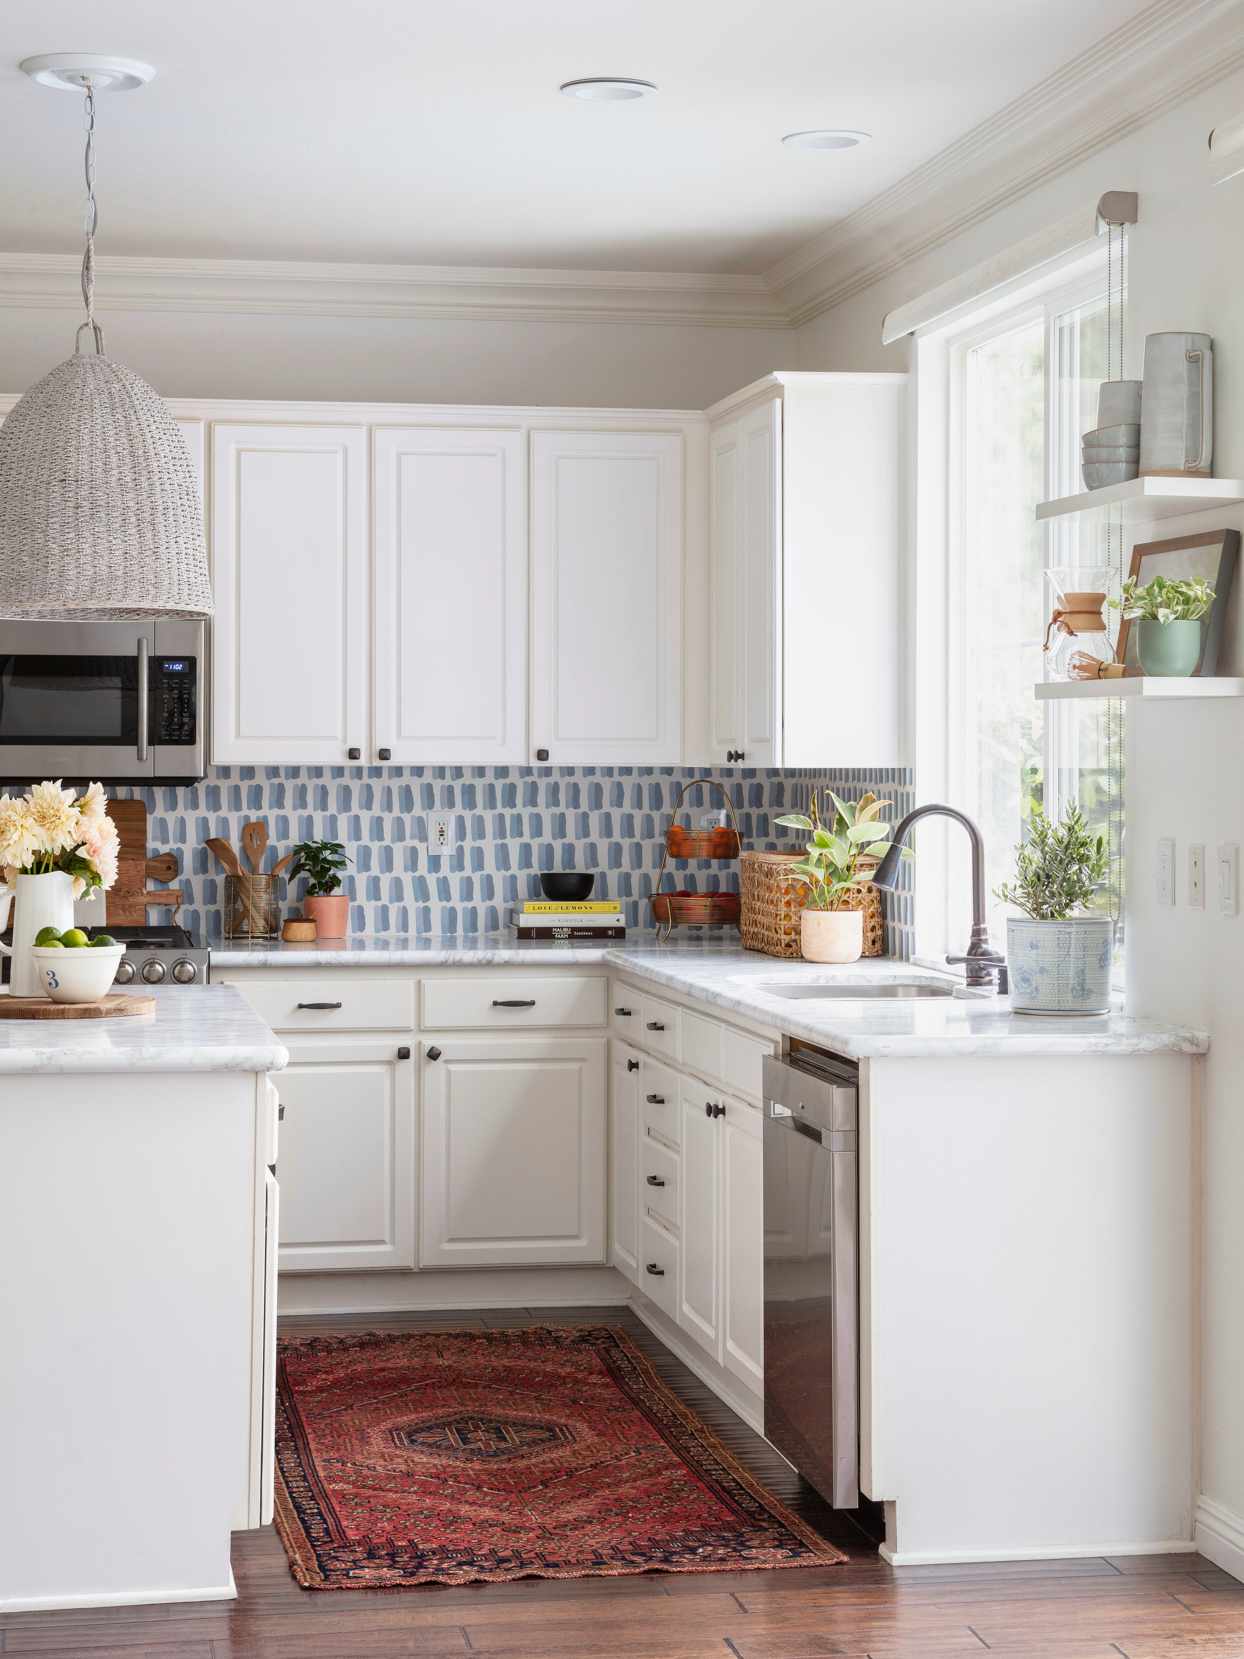 20 Stunning Small Kitchen Decorating Ideas   Better Homes & Gardens